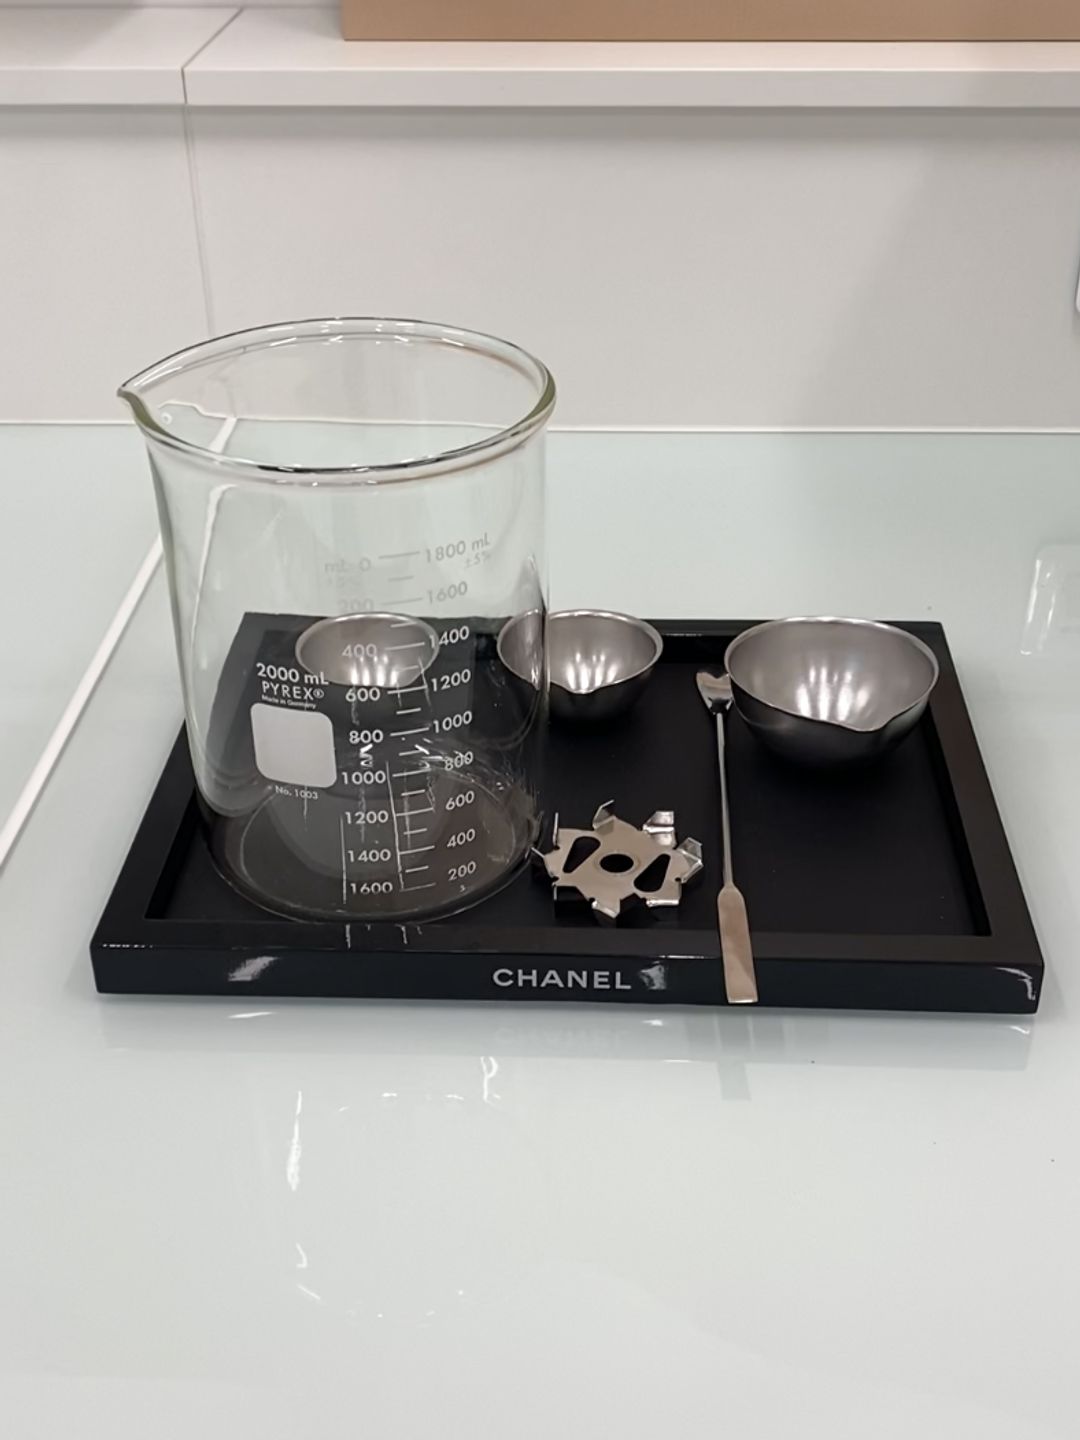 Chanel beaker and lab equipment 